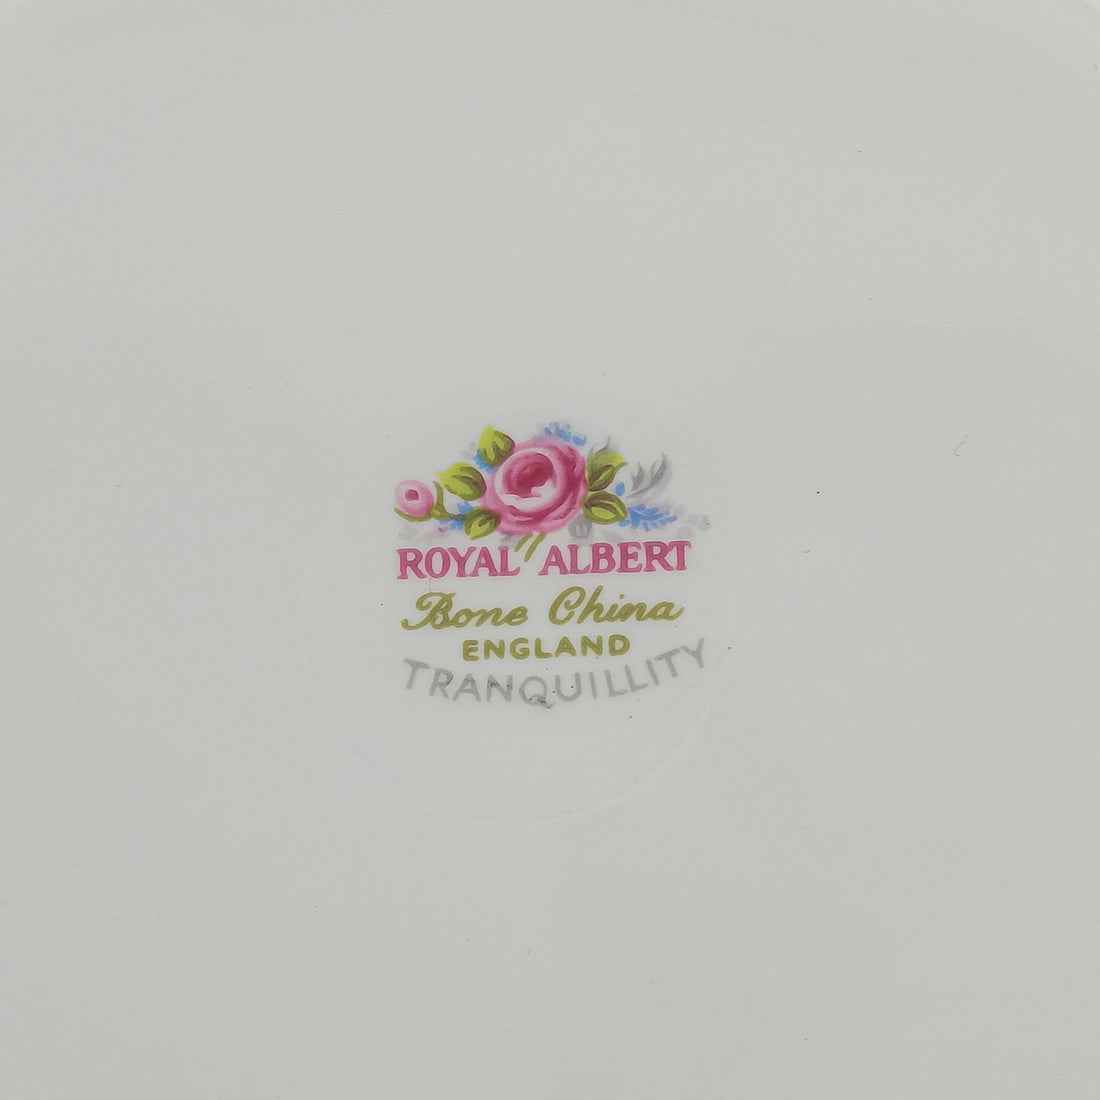 ROYAL ALBERT Tranquillity Serveware - 6 Pieces